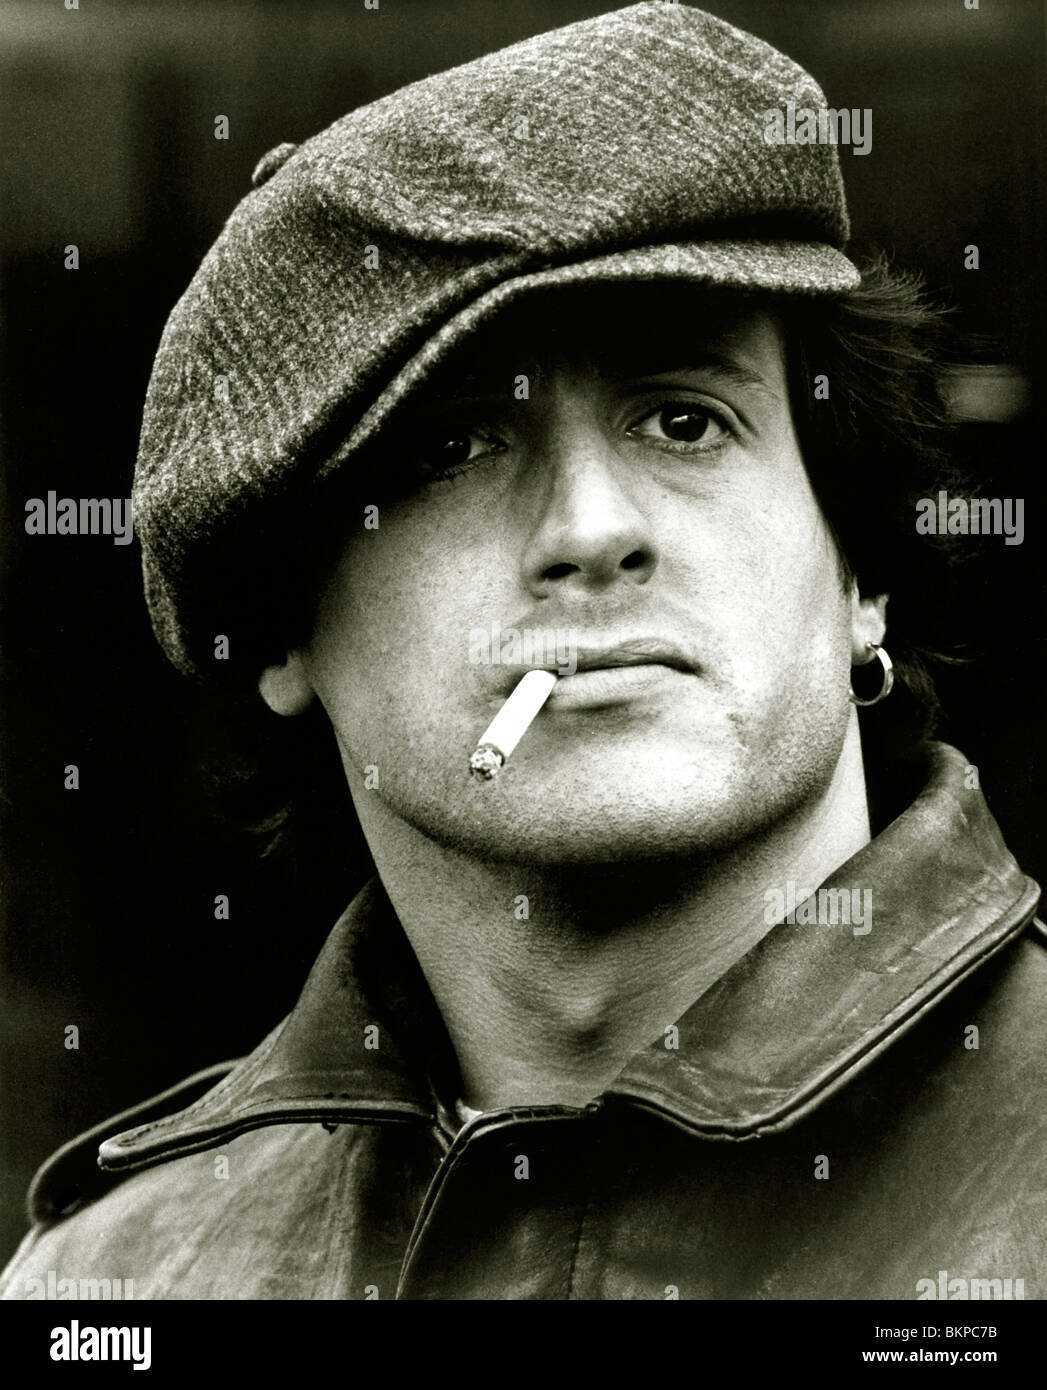 SYLVESTER STALLONE, FLAT CAP, SMOKING, PORTRAIT, EARRING, BOMBER JACKET Stock Photo